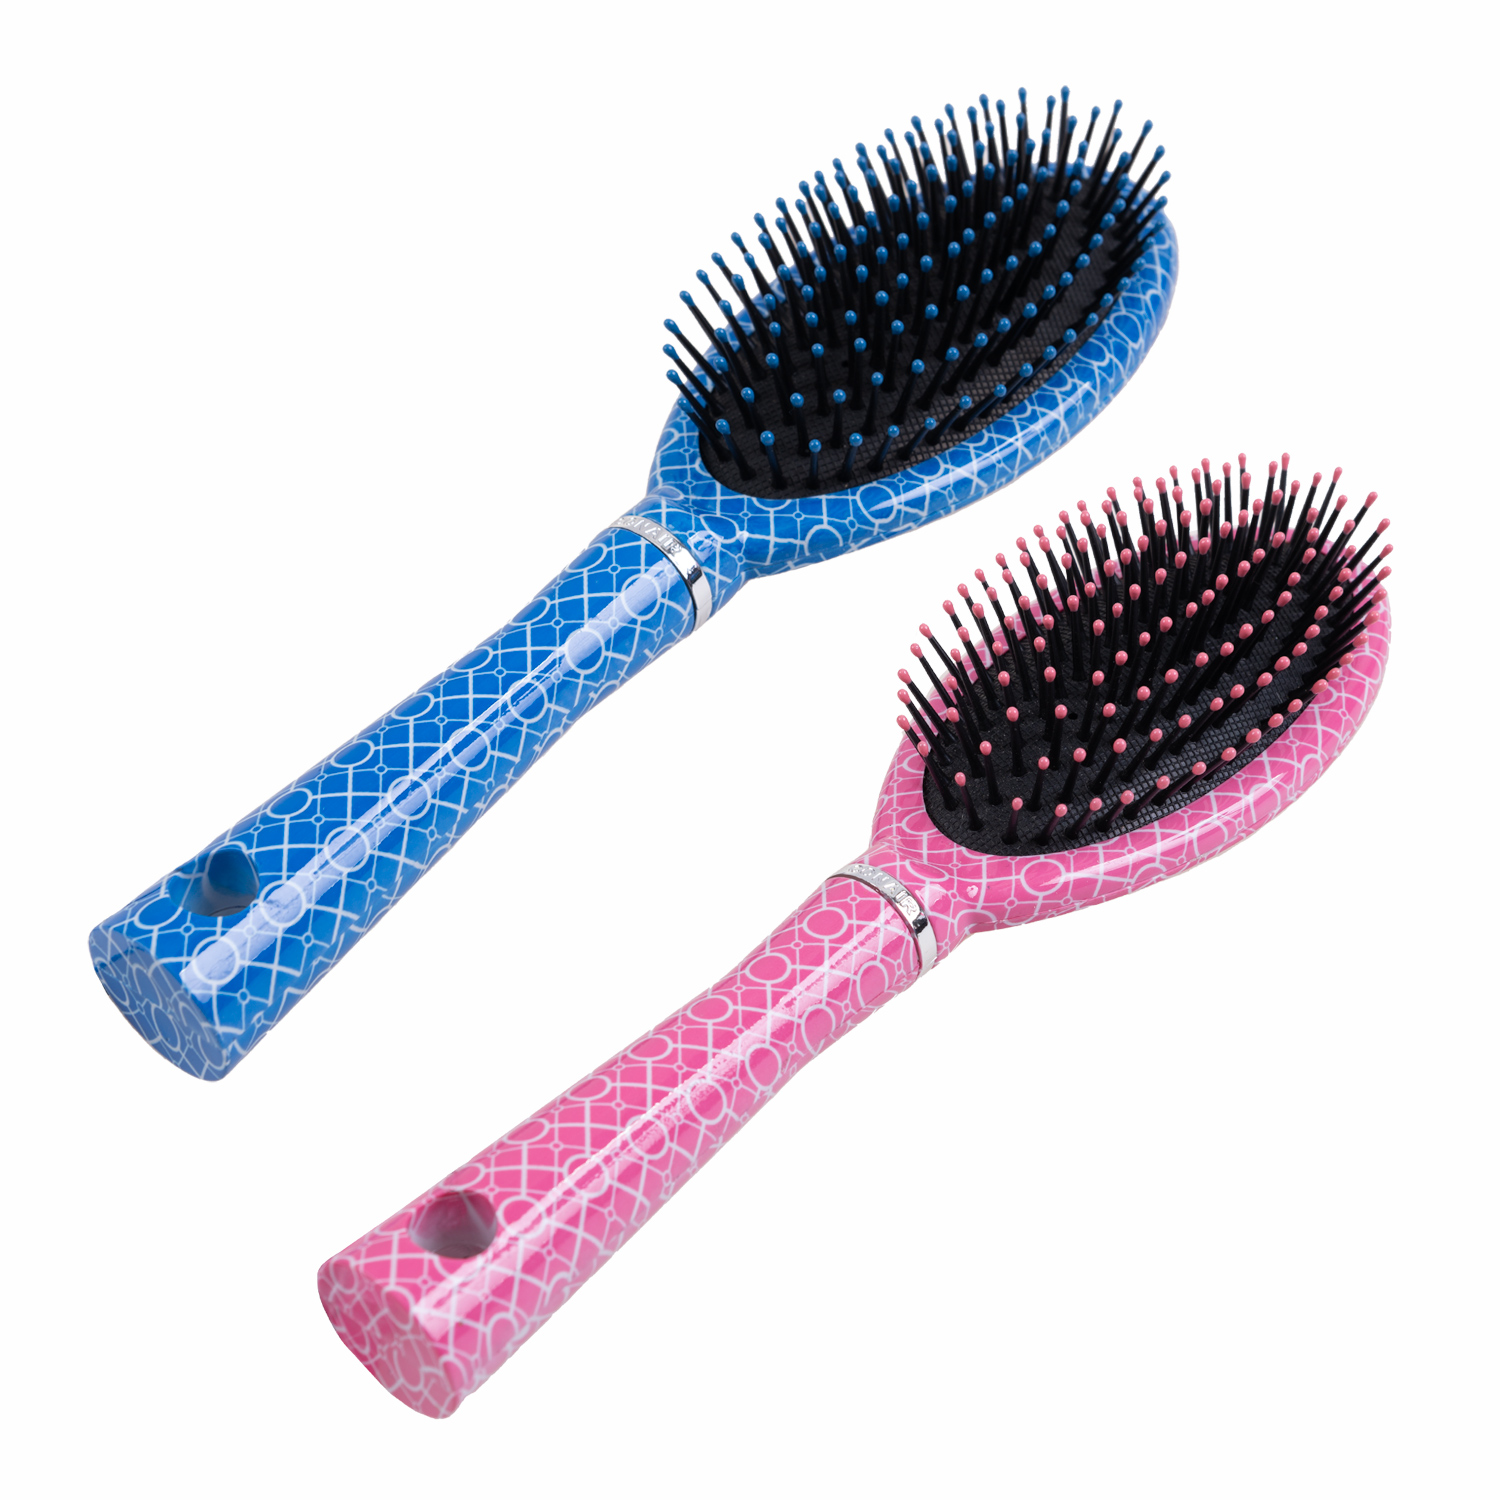 Conair - Detangle and style hairbrush - Pink